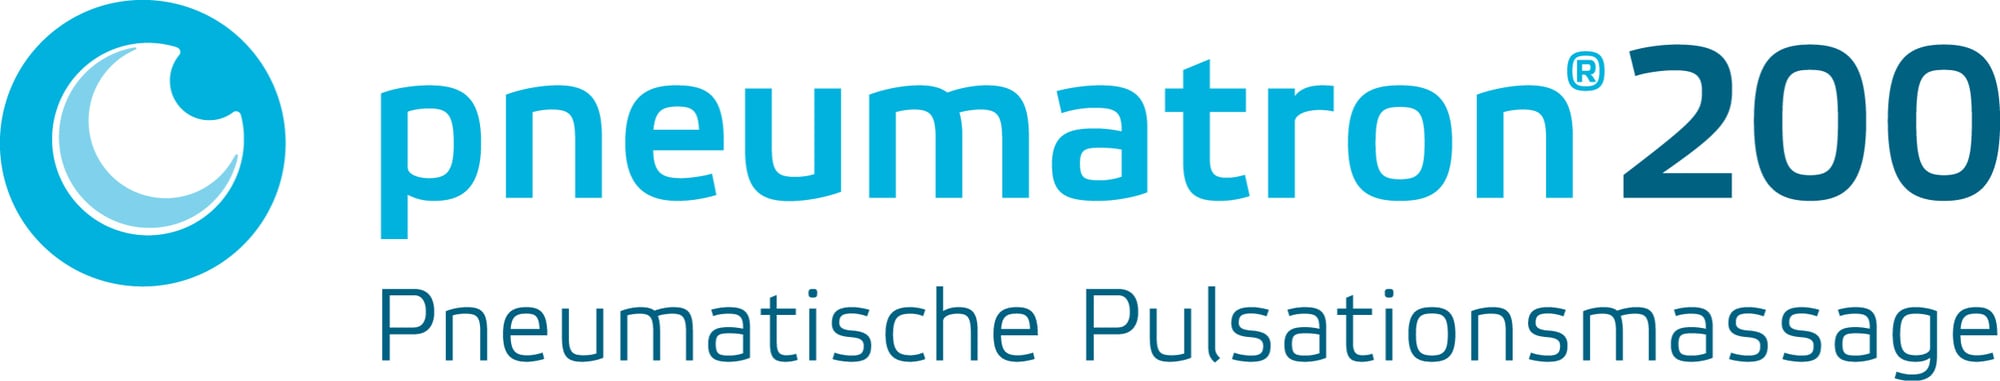 Pneumatron200_Logo